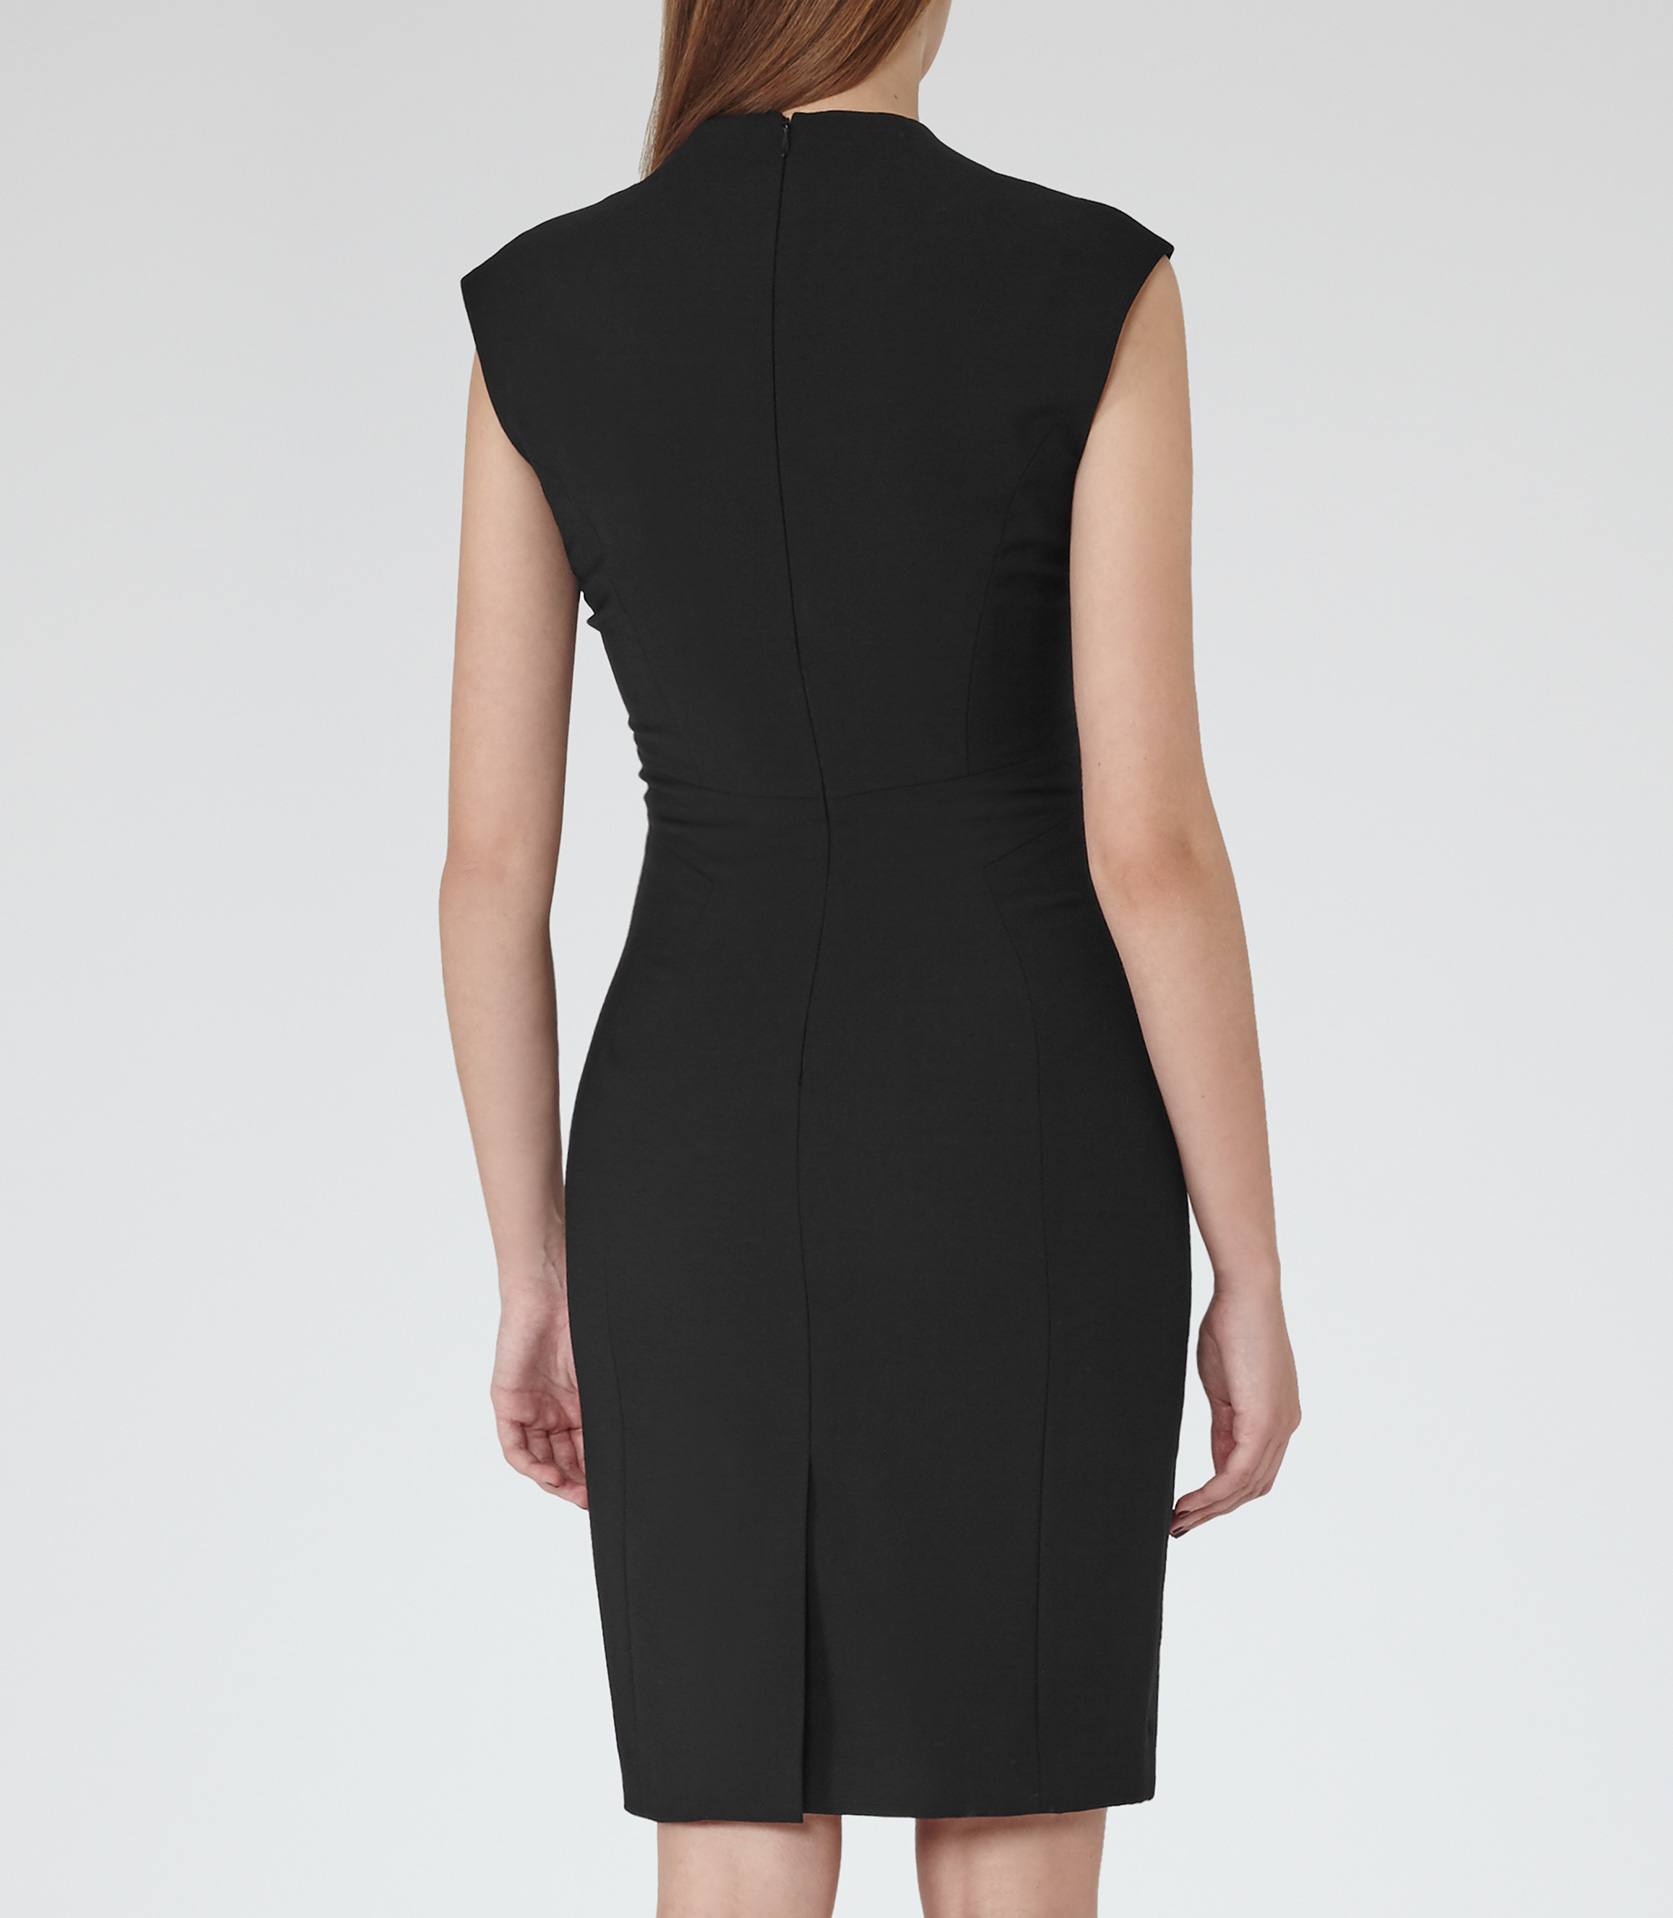 Lyst - Reiss Vara Dress Tailored Dress in Black